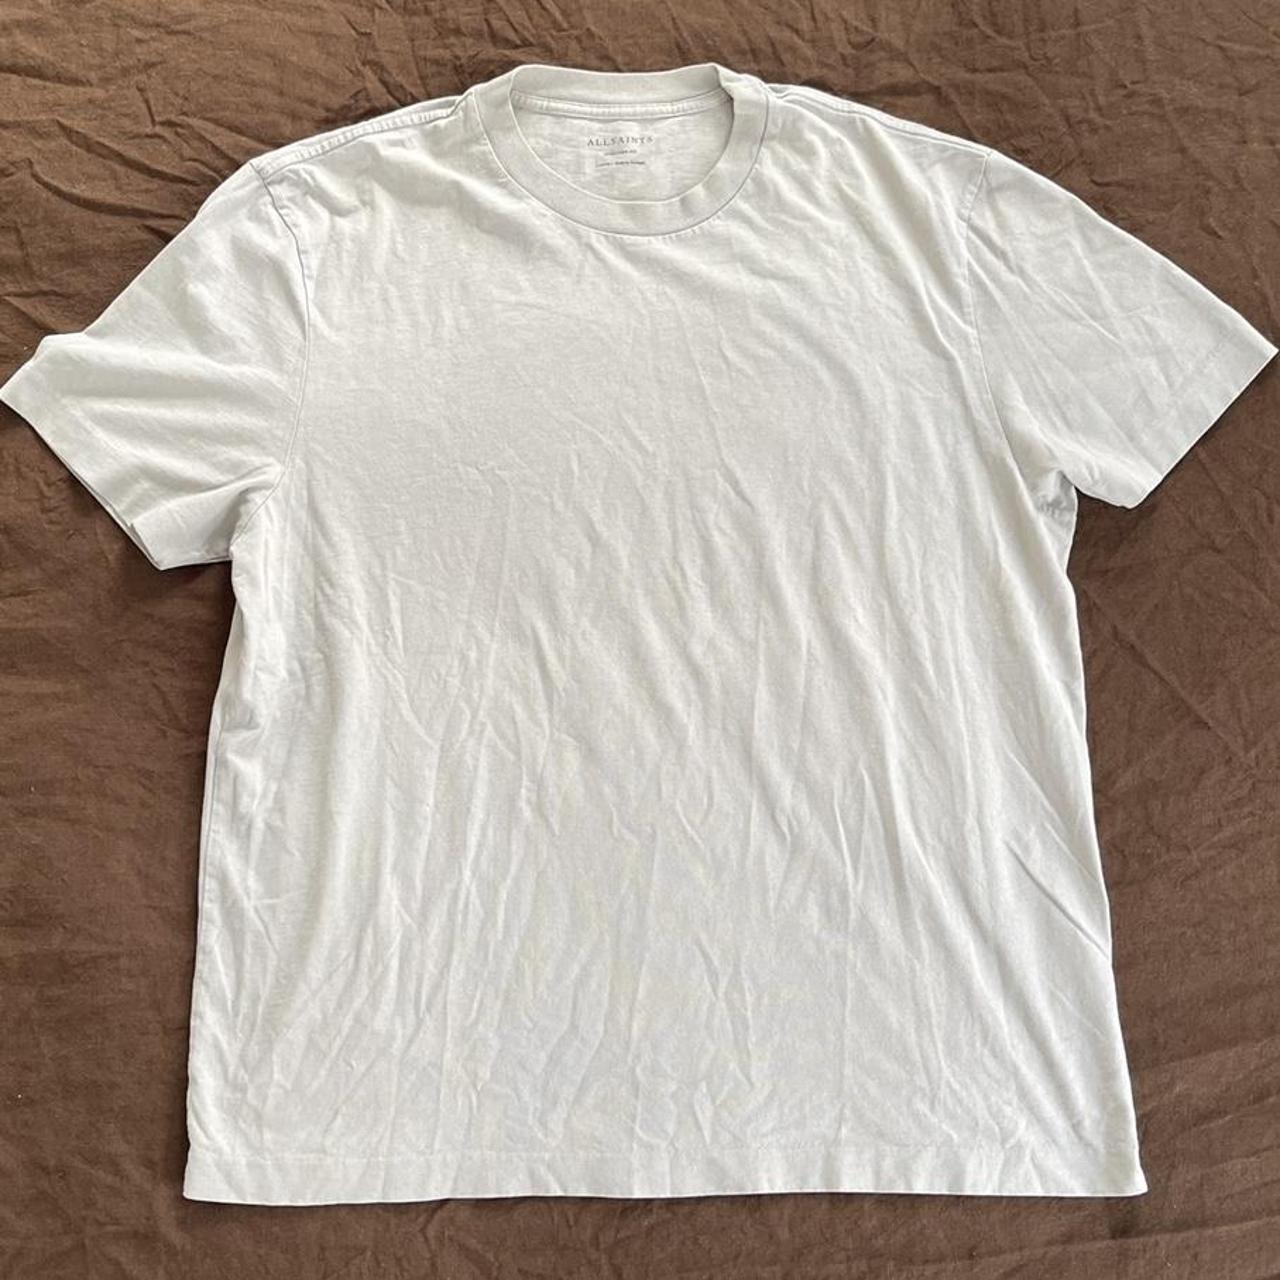 AllSaints Men's Cream and Grey T-shirt | Depop